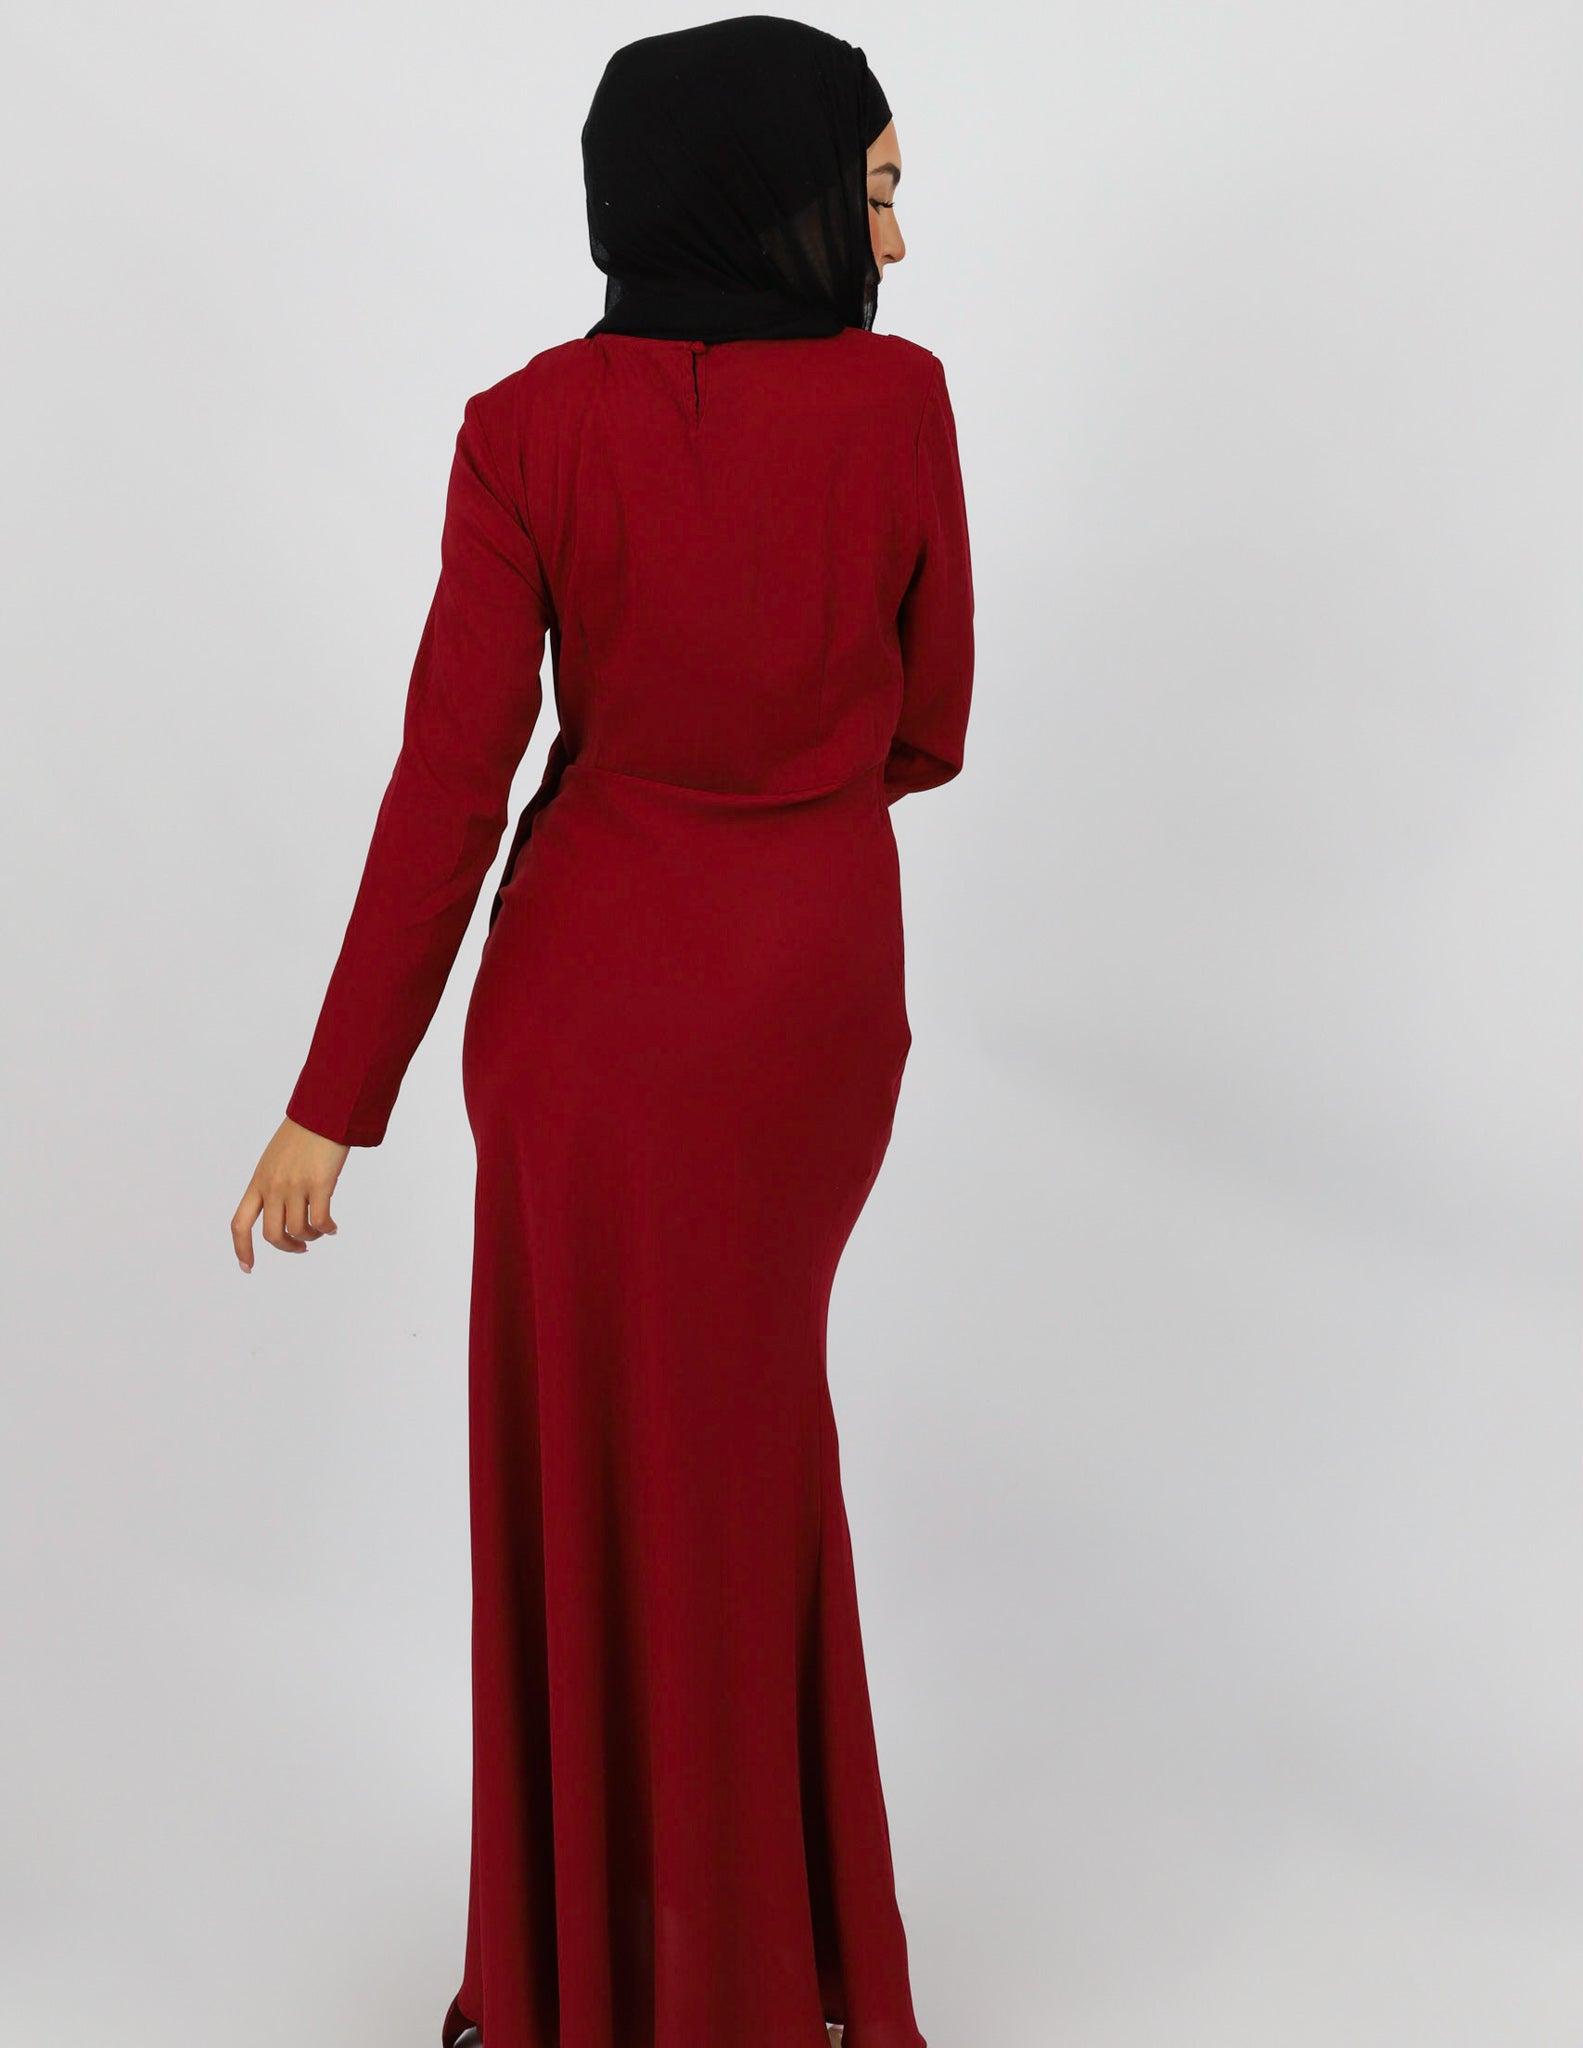 M7746Maroon-dress-abaya